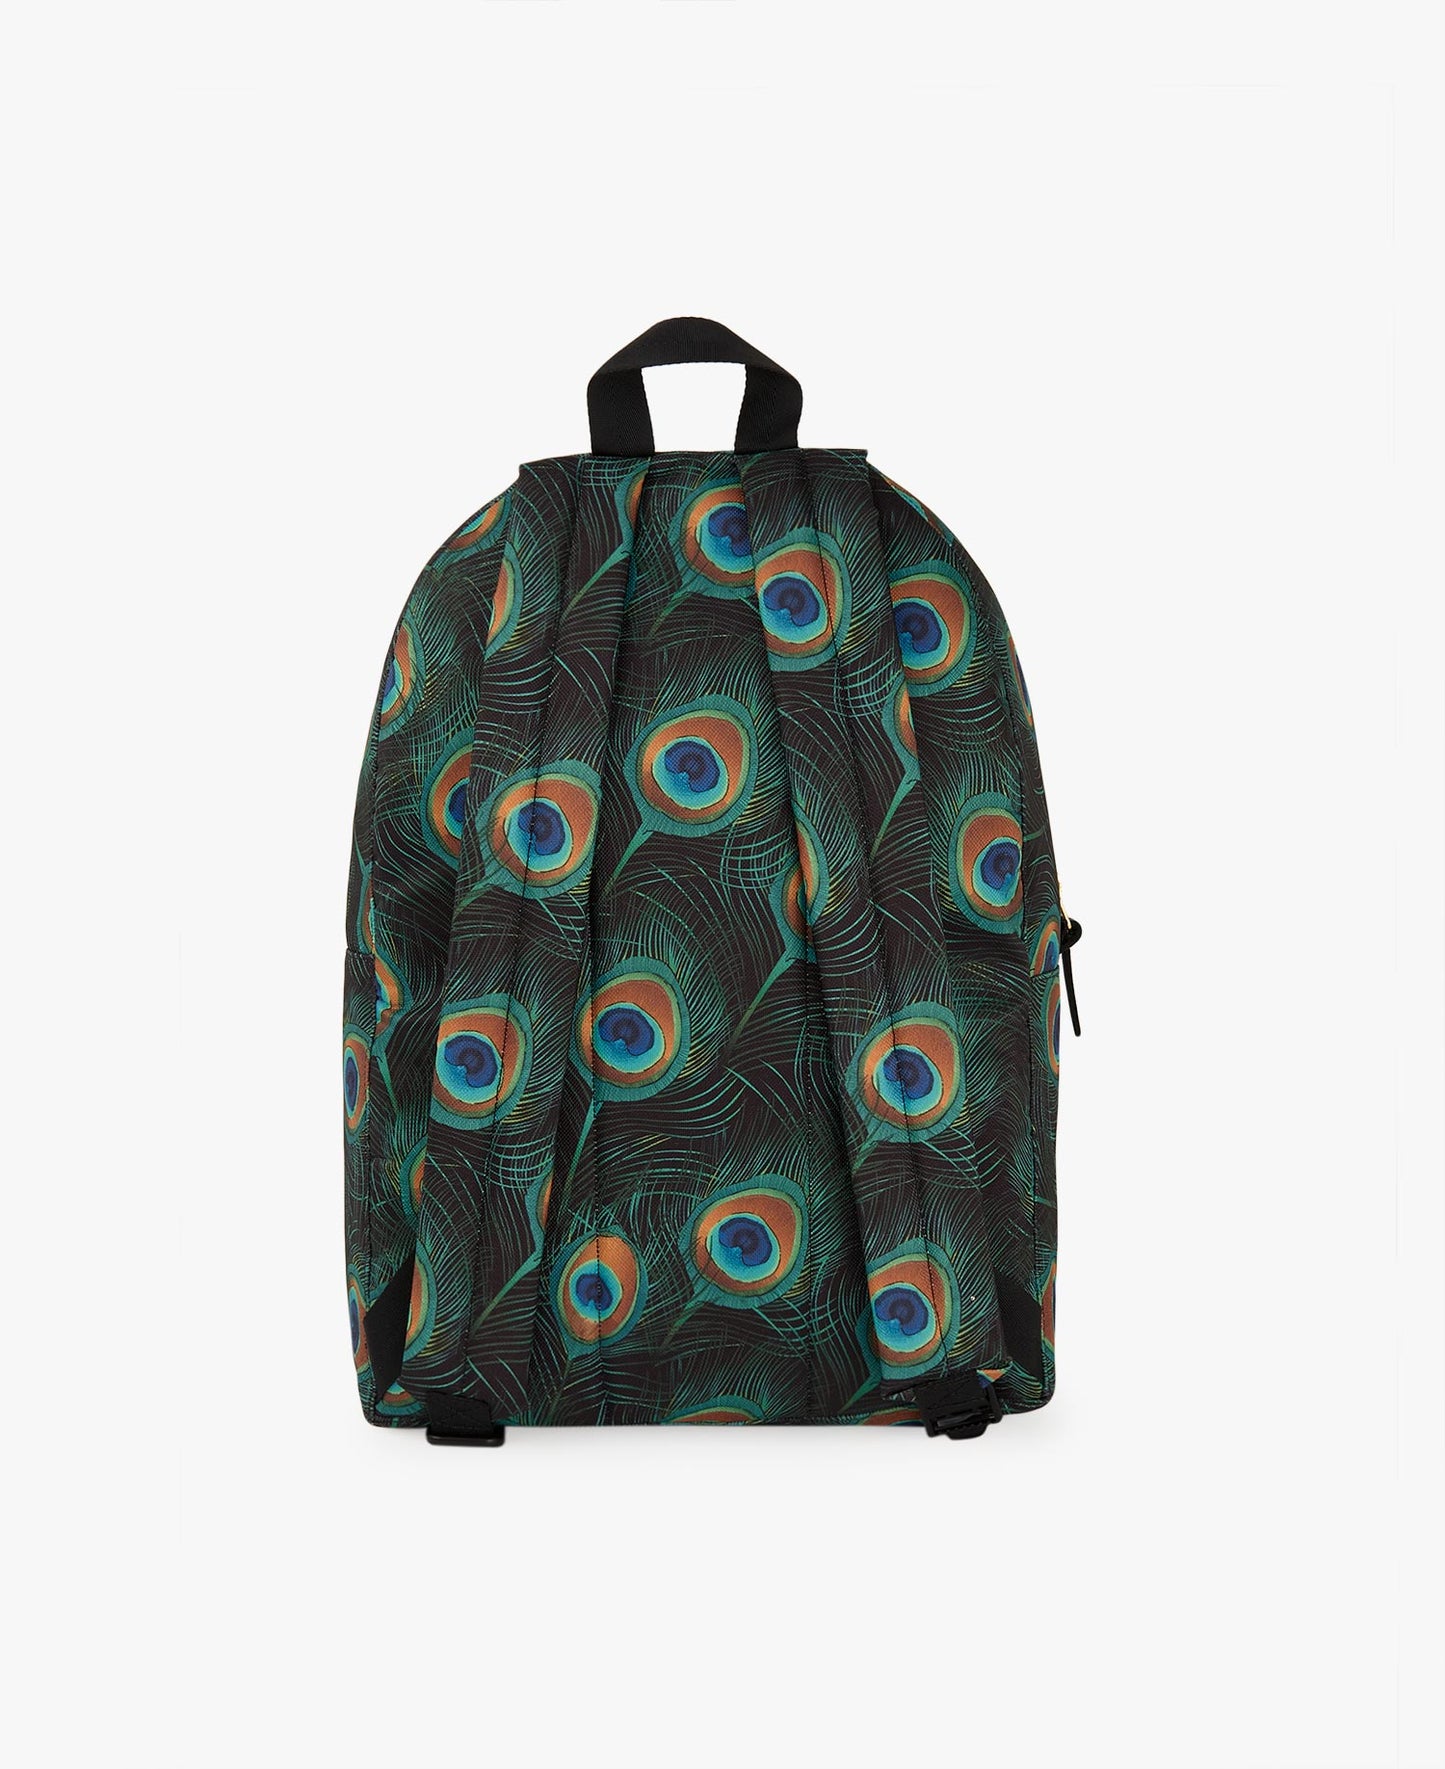 Backpack - Peacock